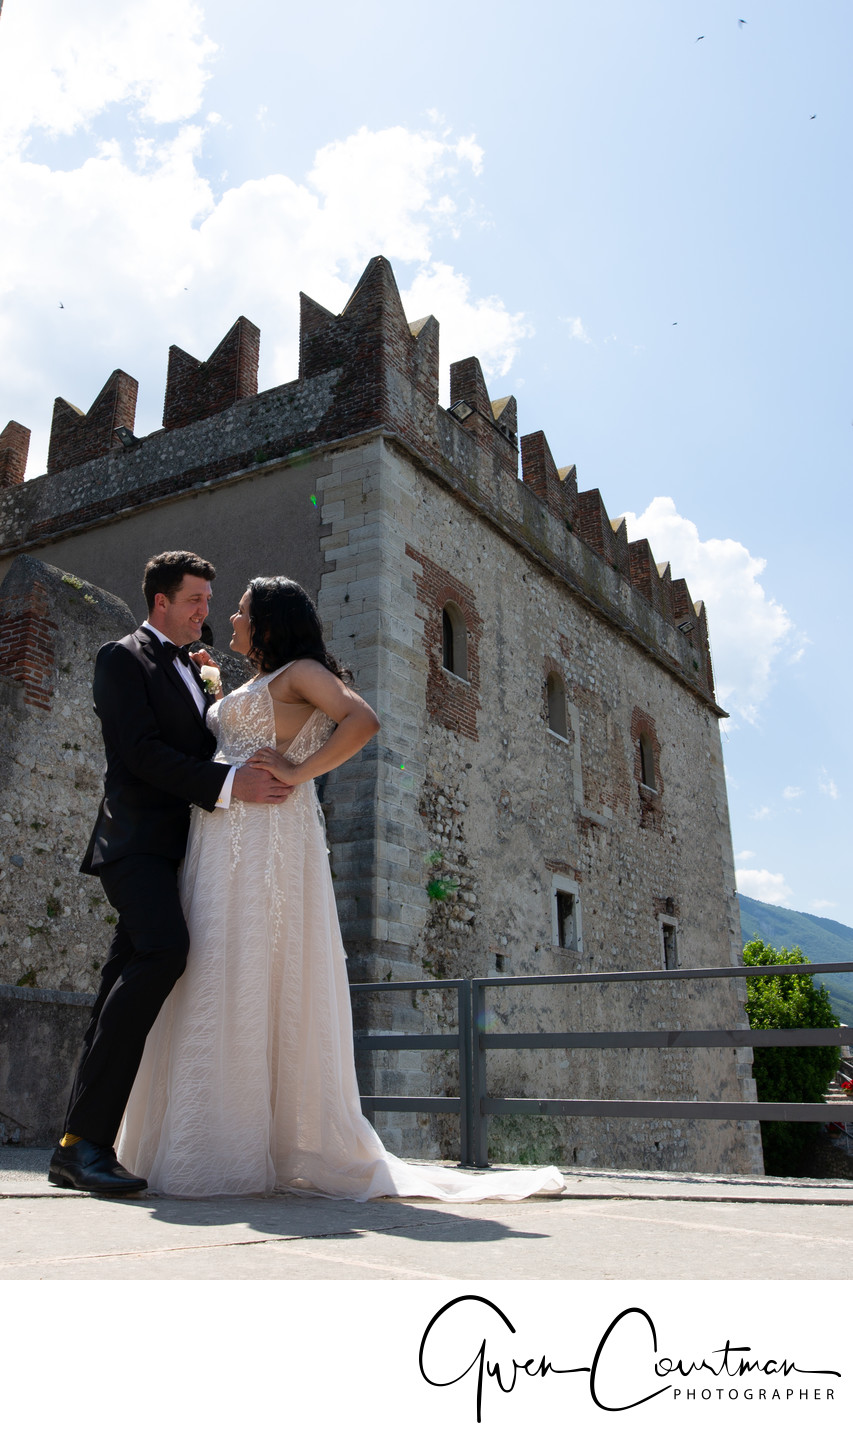 Fantastic backdrop for a wedding, Malcesine Castle 